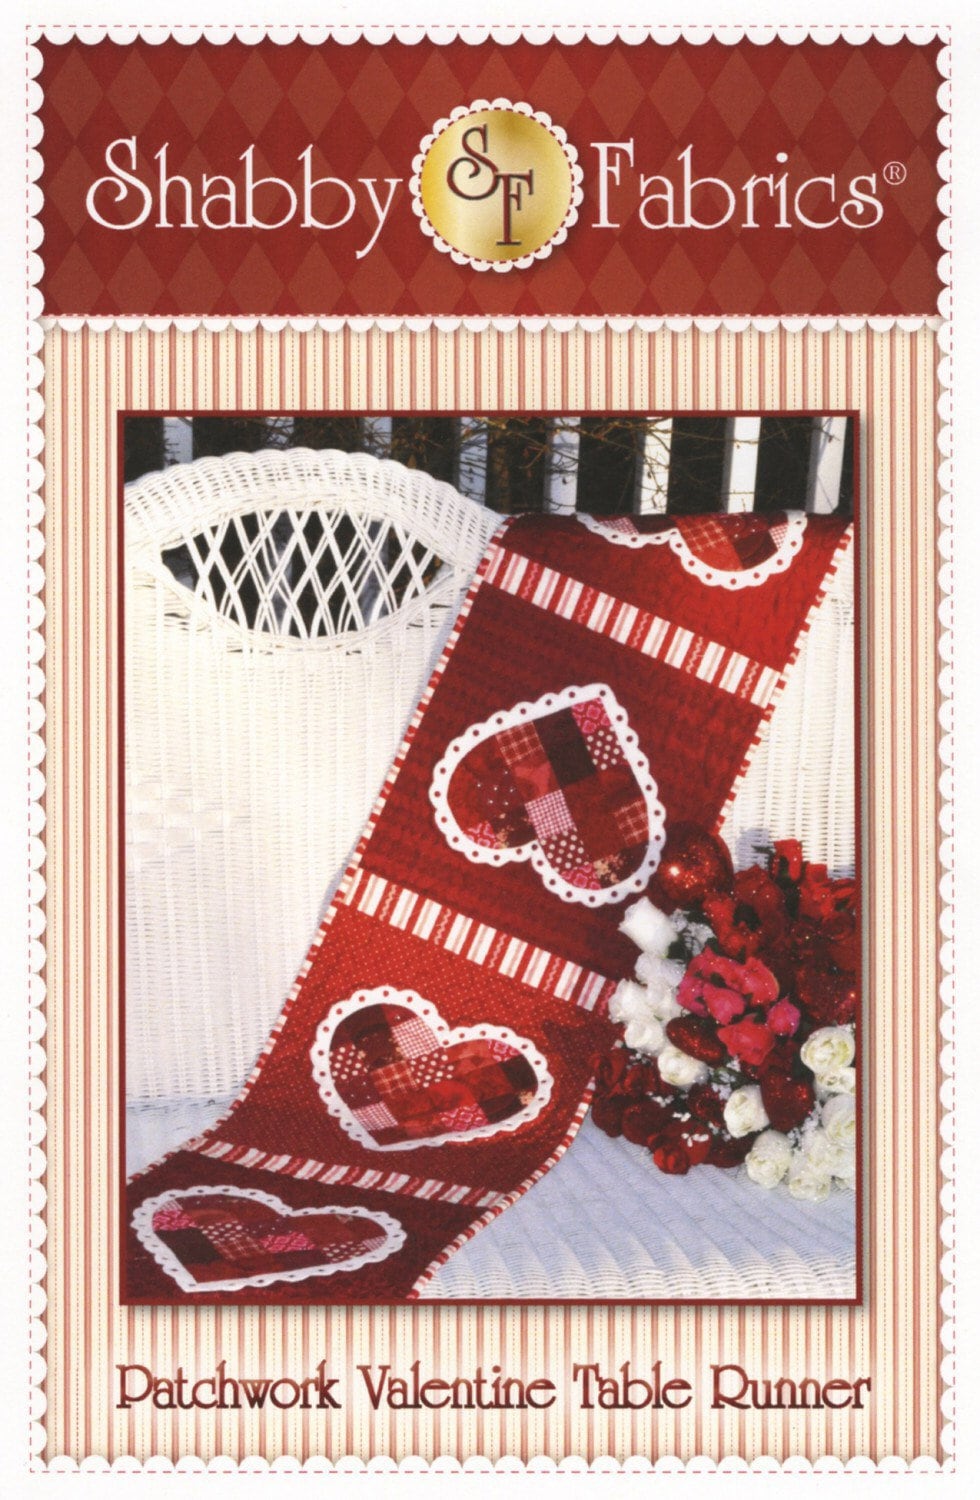 Patchwork Valentine Table Runner Pattern - Shabby Fabrics - Jennifer Bosworth - Heart Quilt Pattern - Valentines Day Quilt Pattern